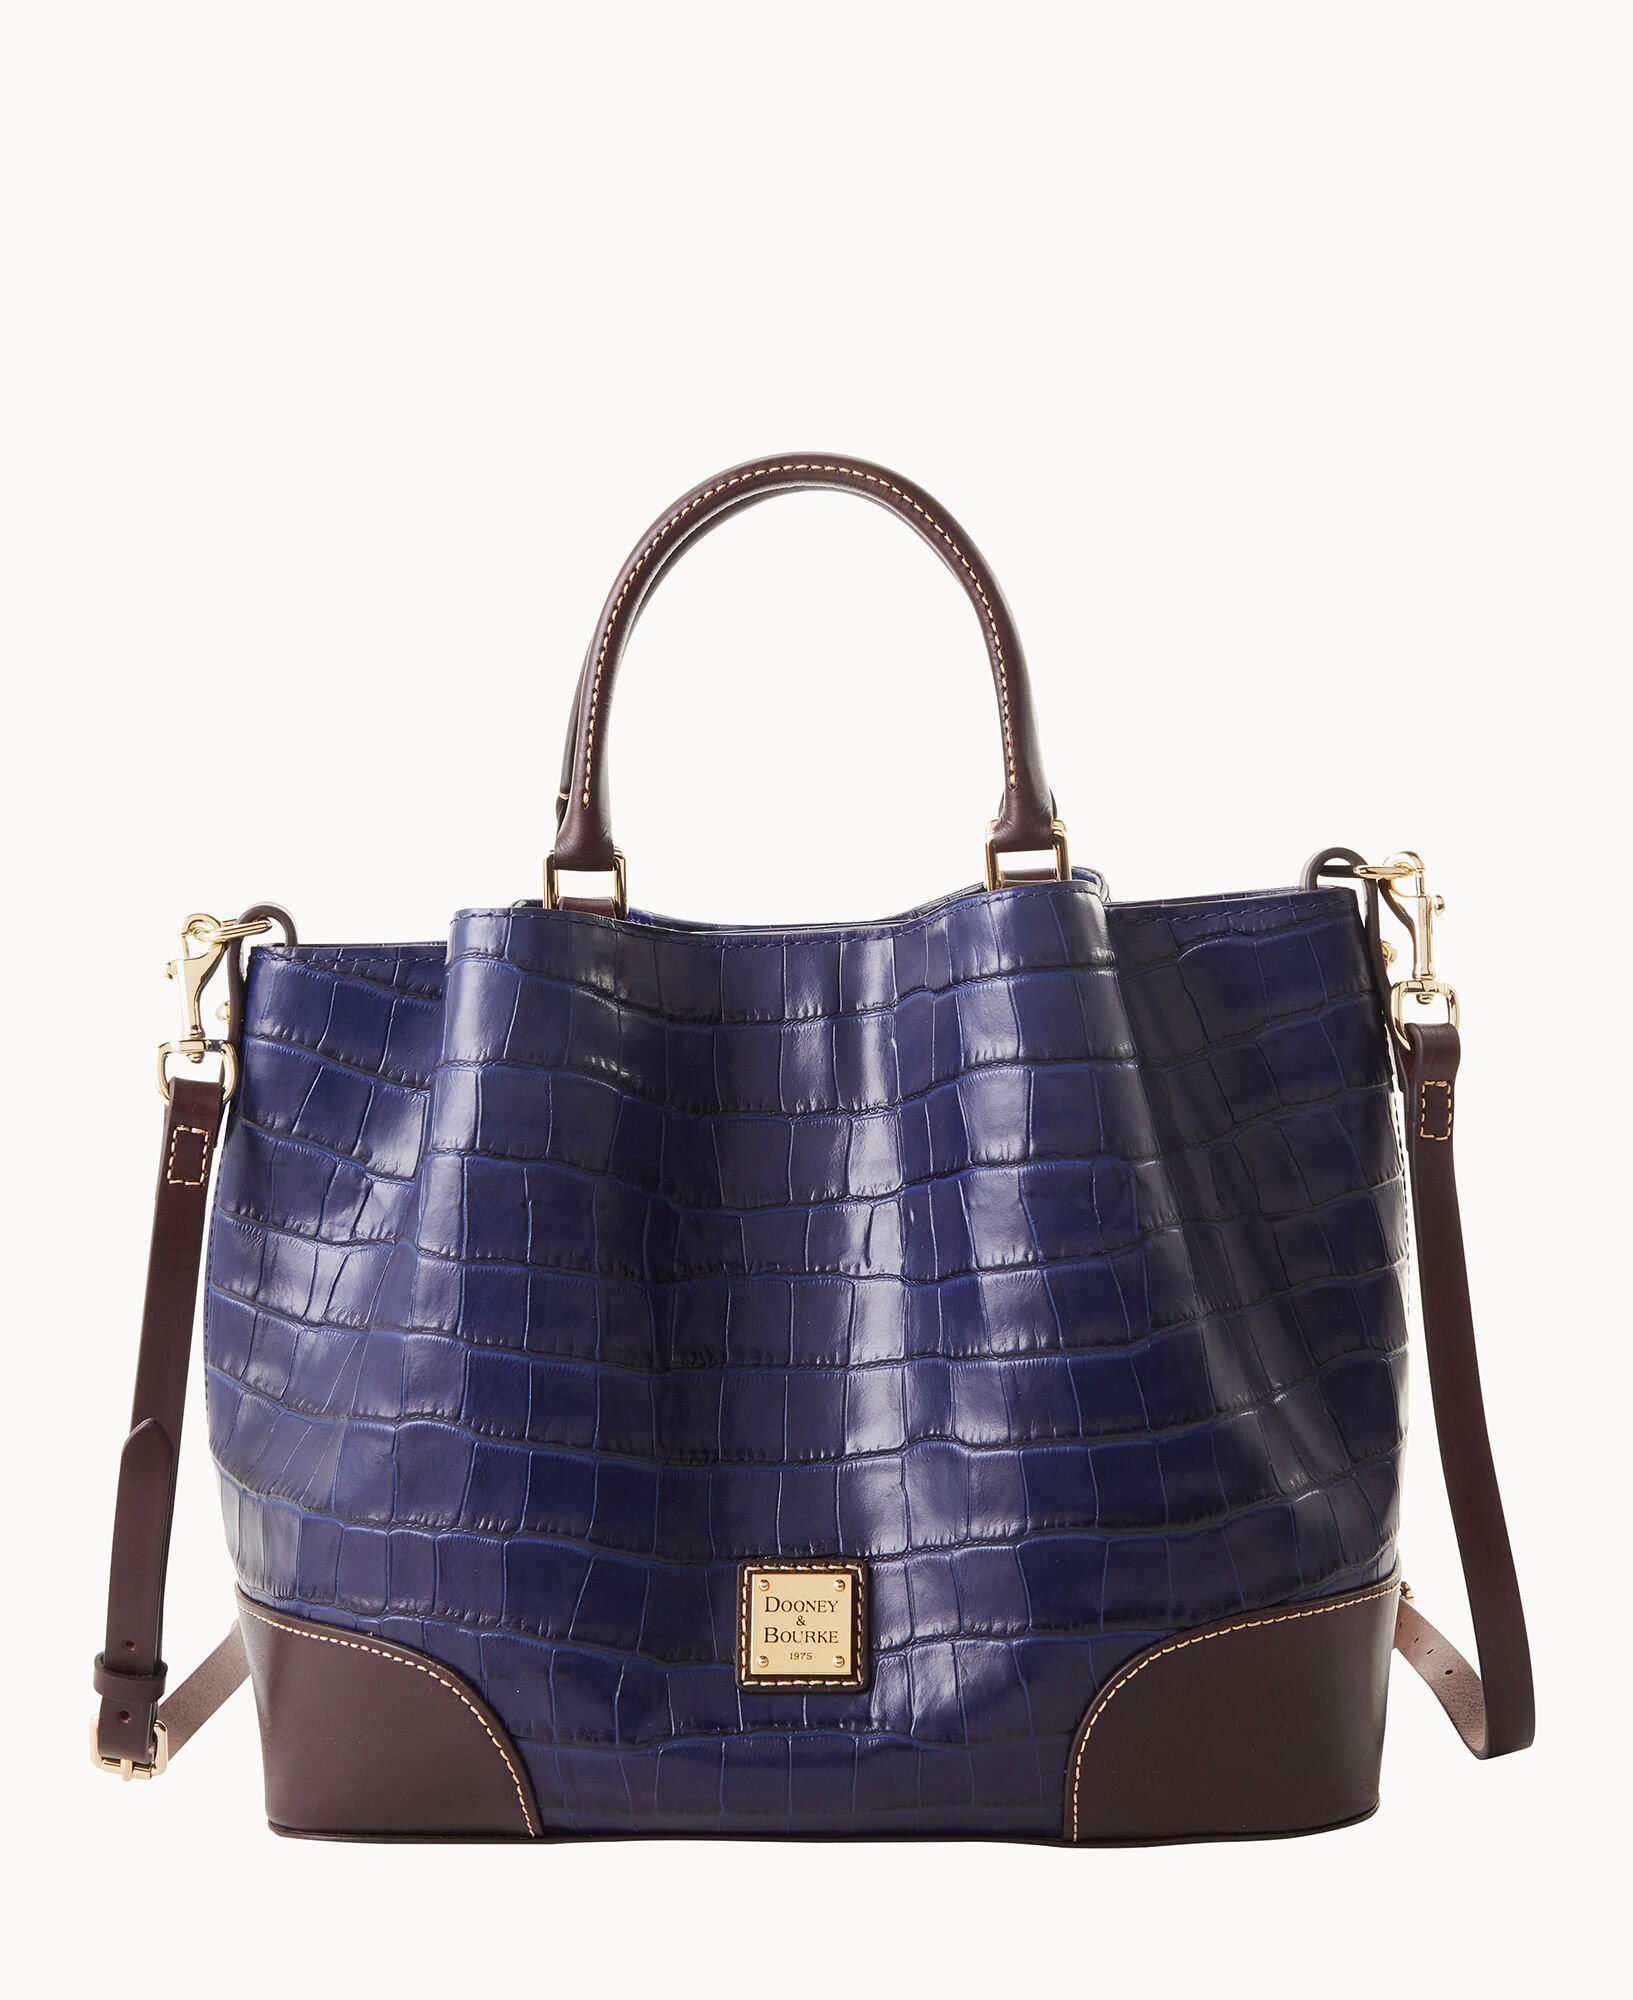 DOONEY BOURKE NAVY BLUE SHOULDER HANDBAG – Ubeauty fashion.com